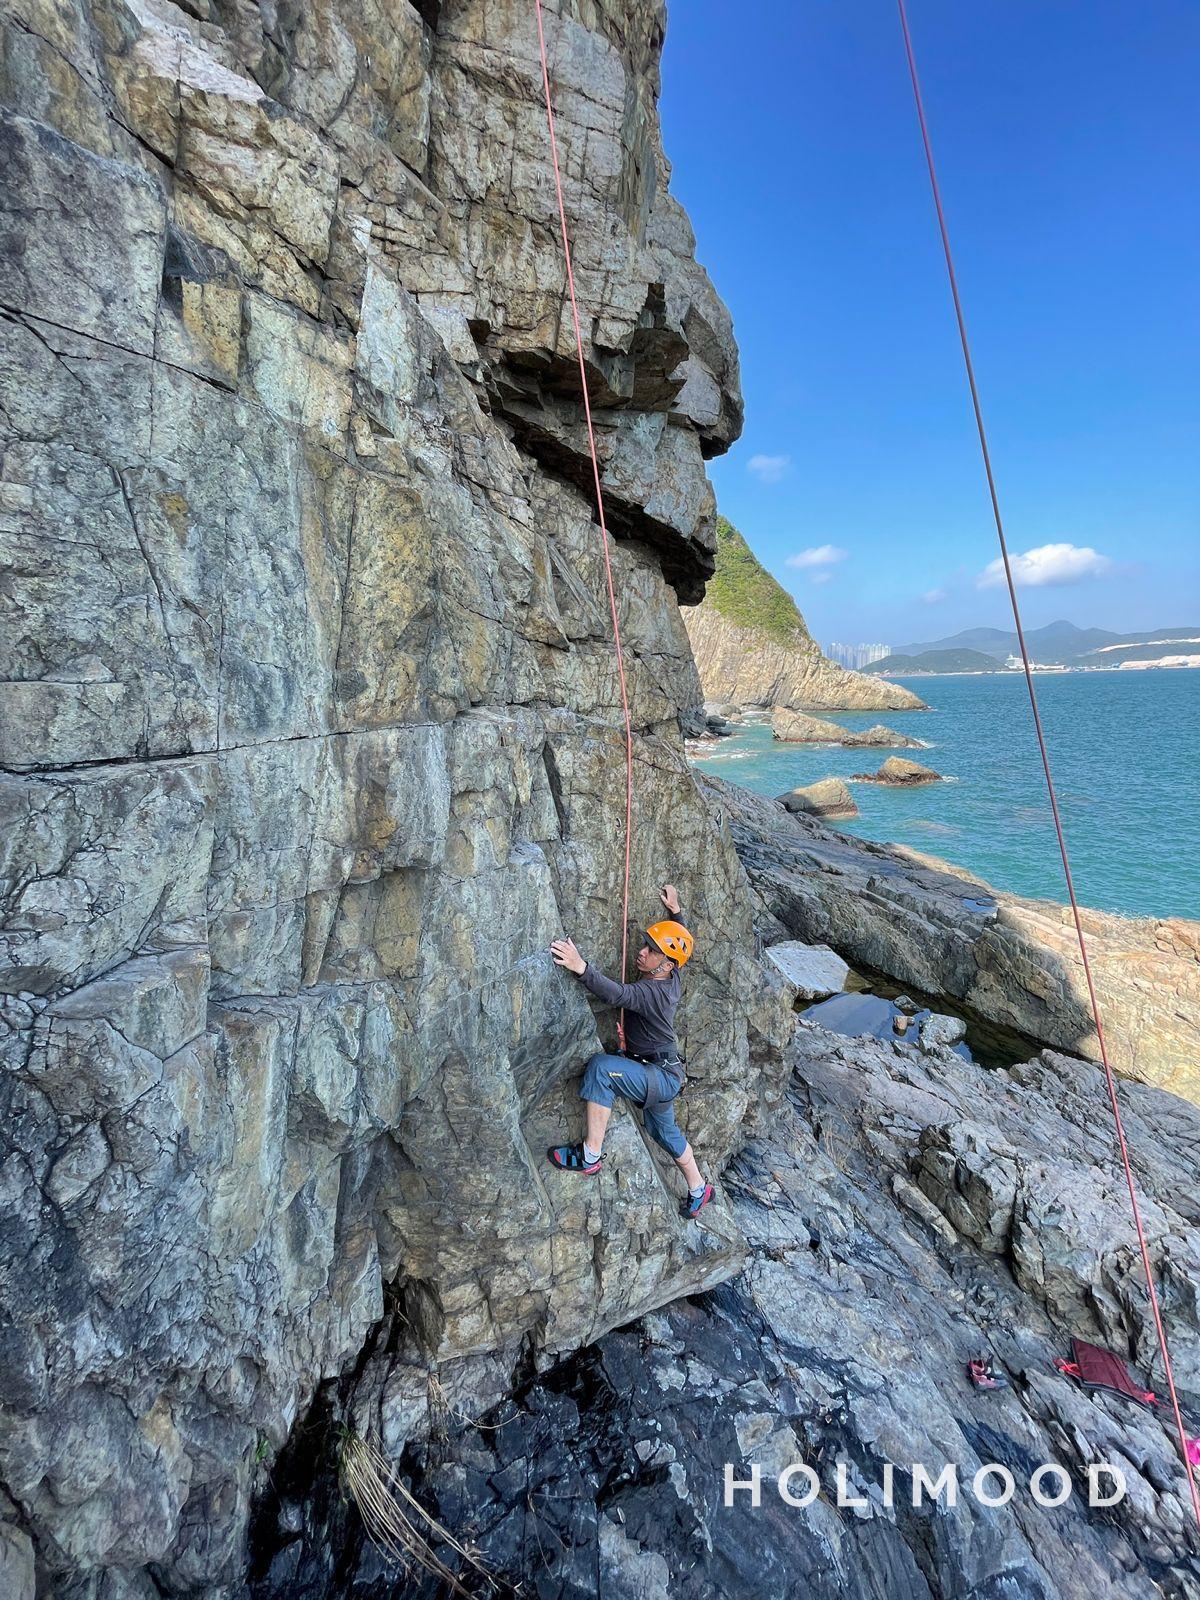 Explorer Hong Kong 【歌連臣角】沿繩下降及攀岩 體驗 8